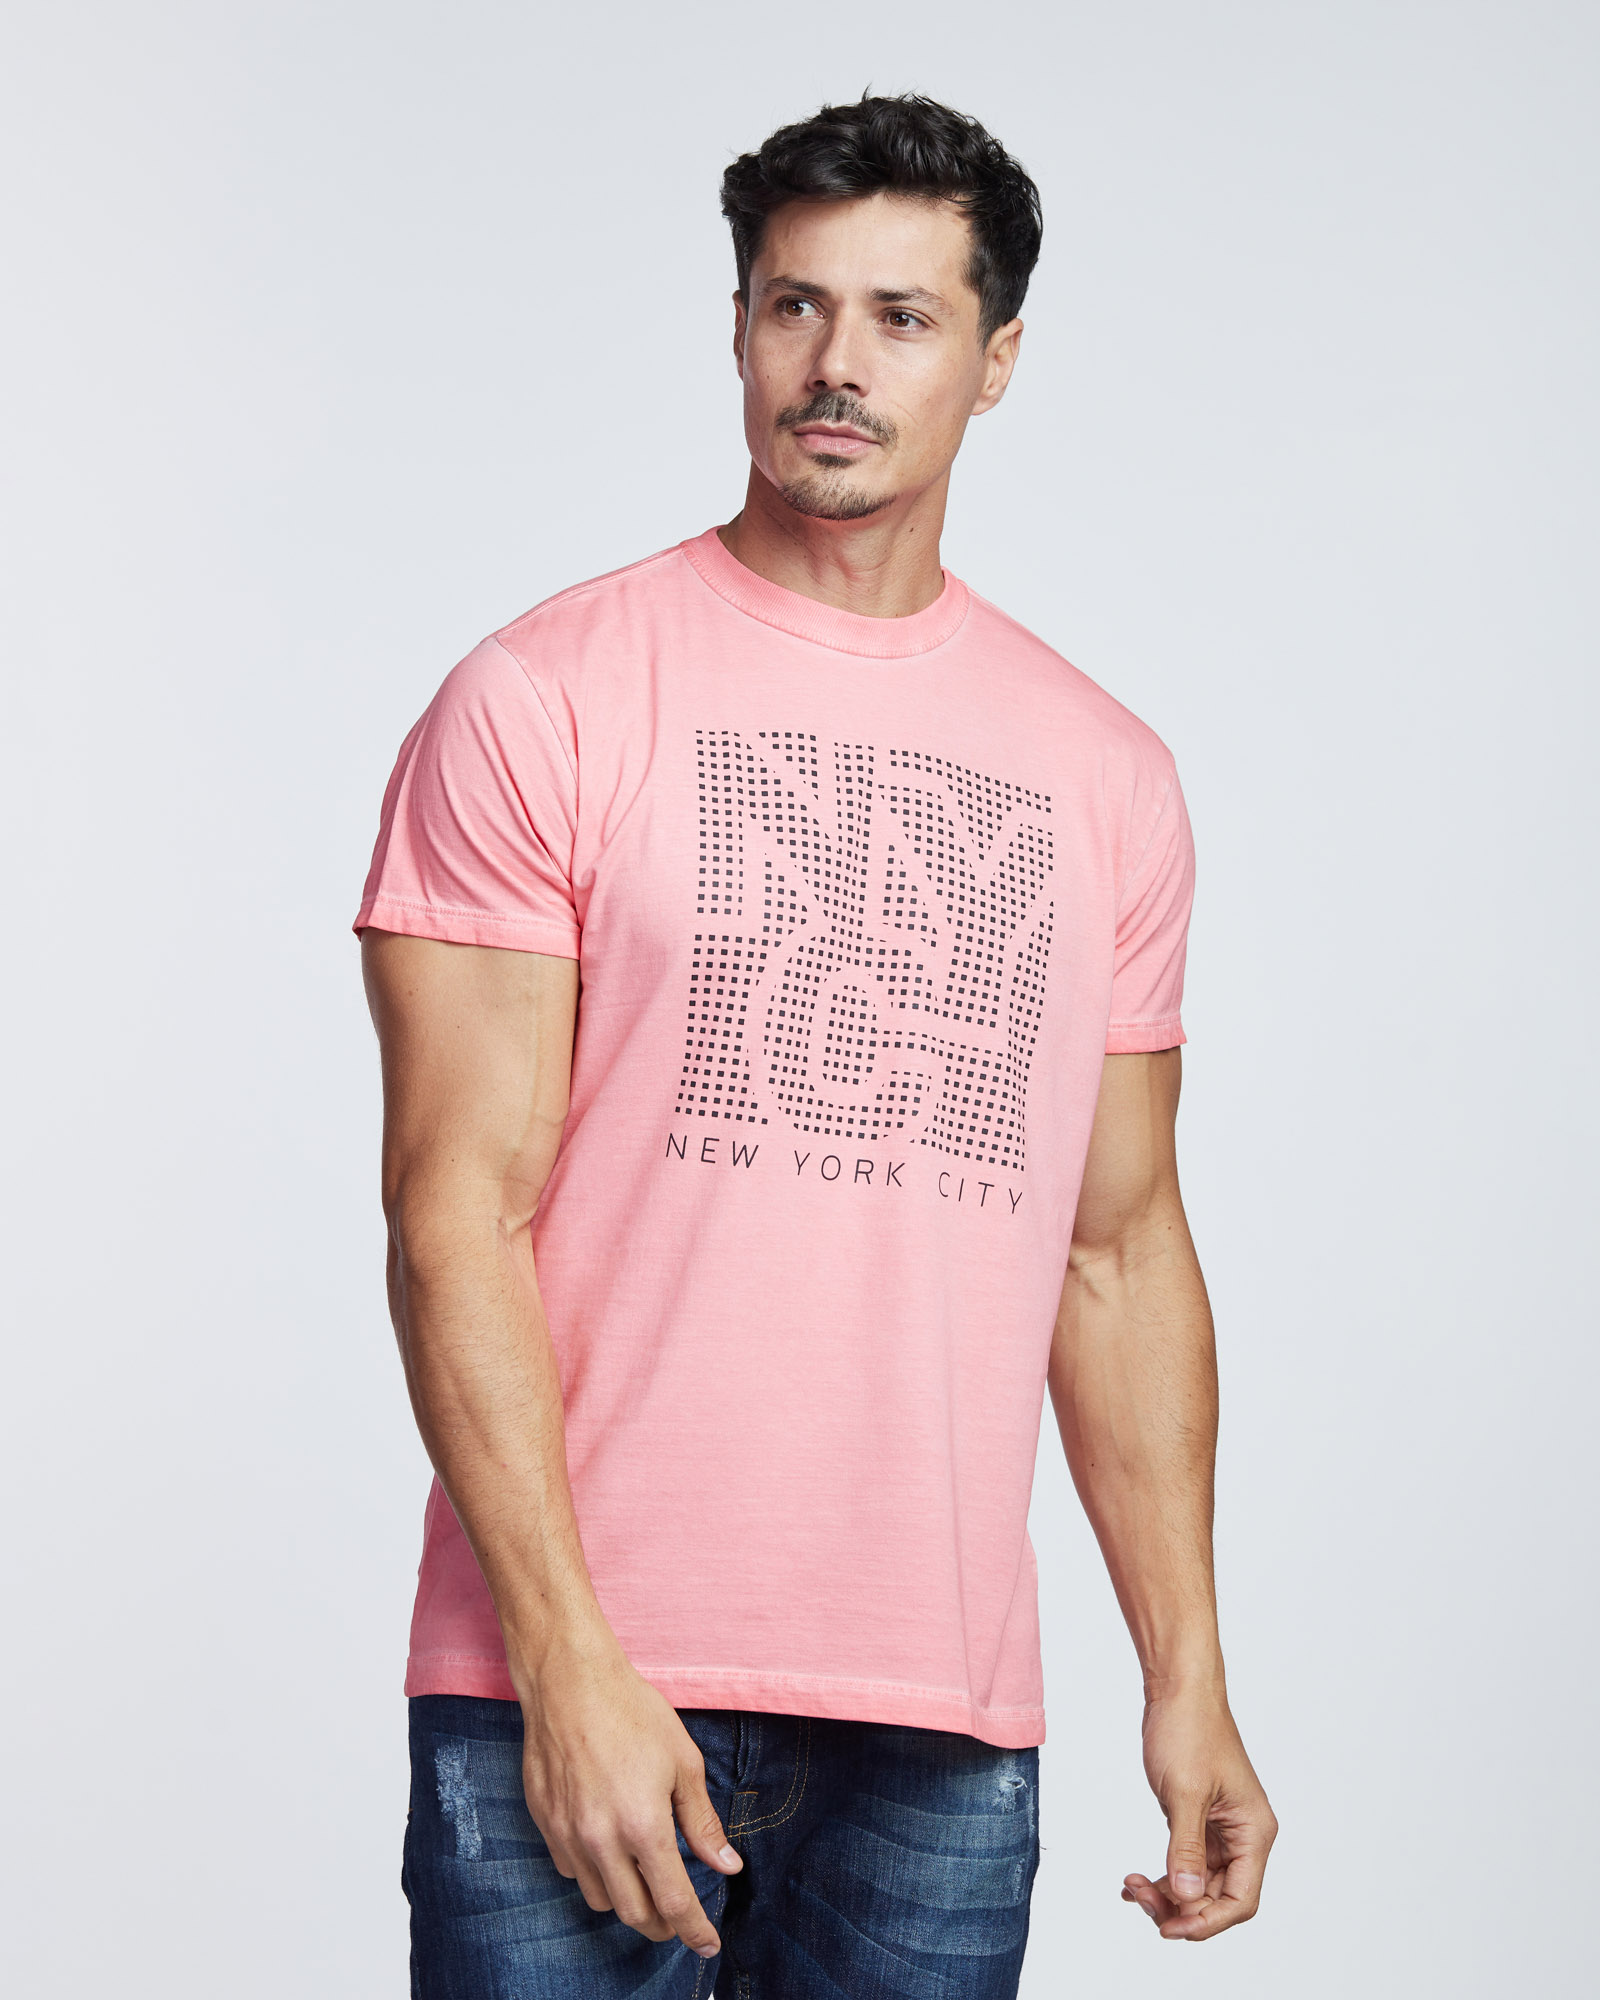 Camiseta Stone New York City Masculina Evolvee